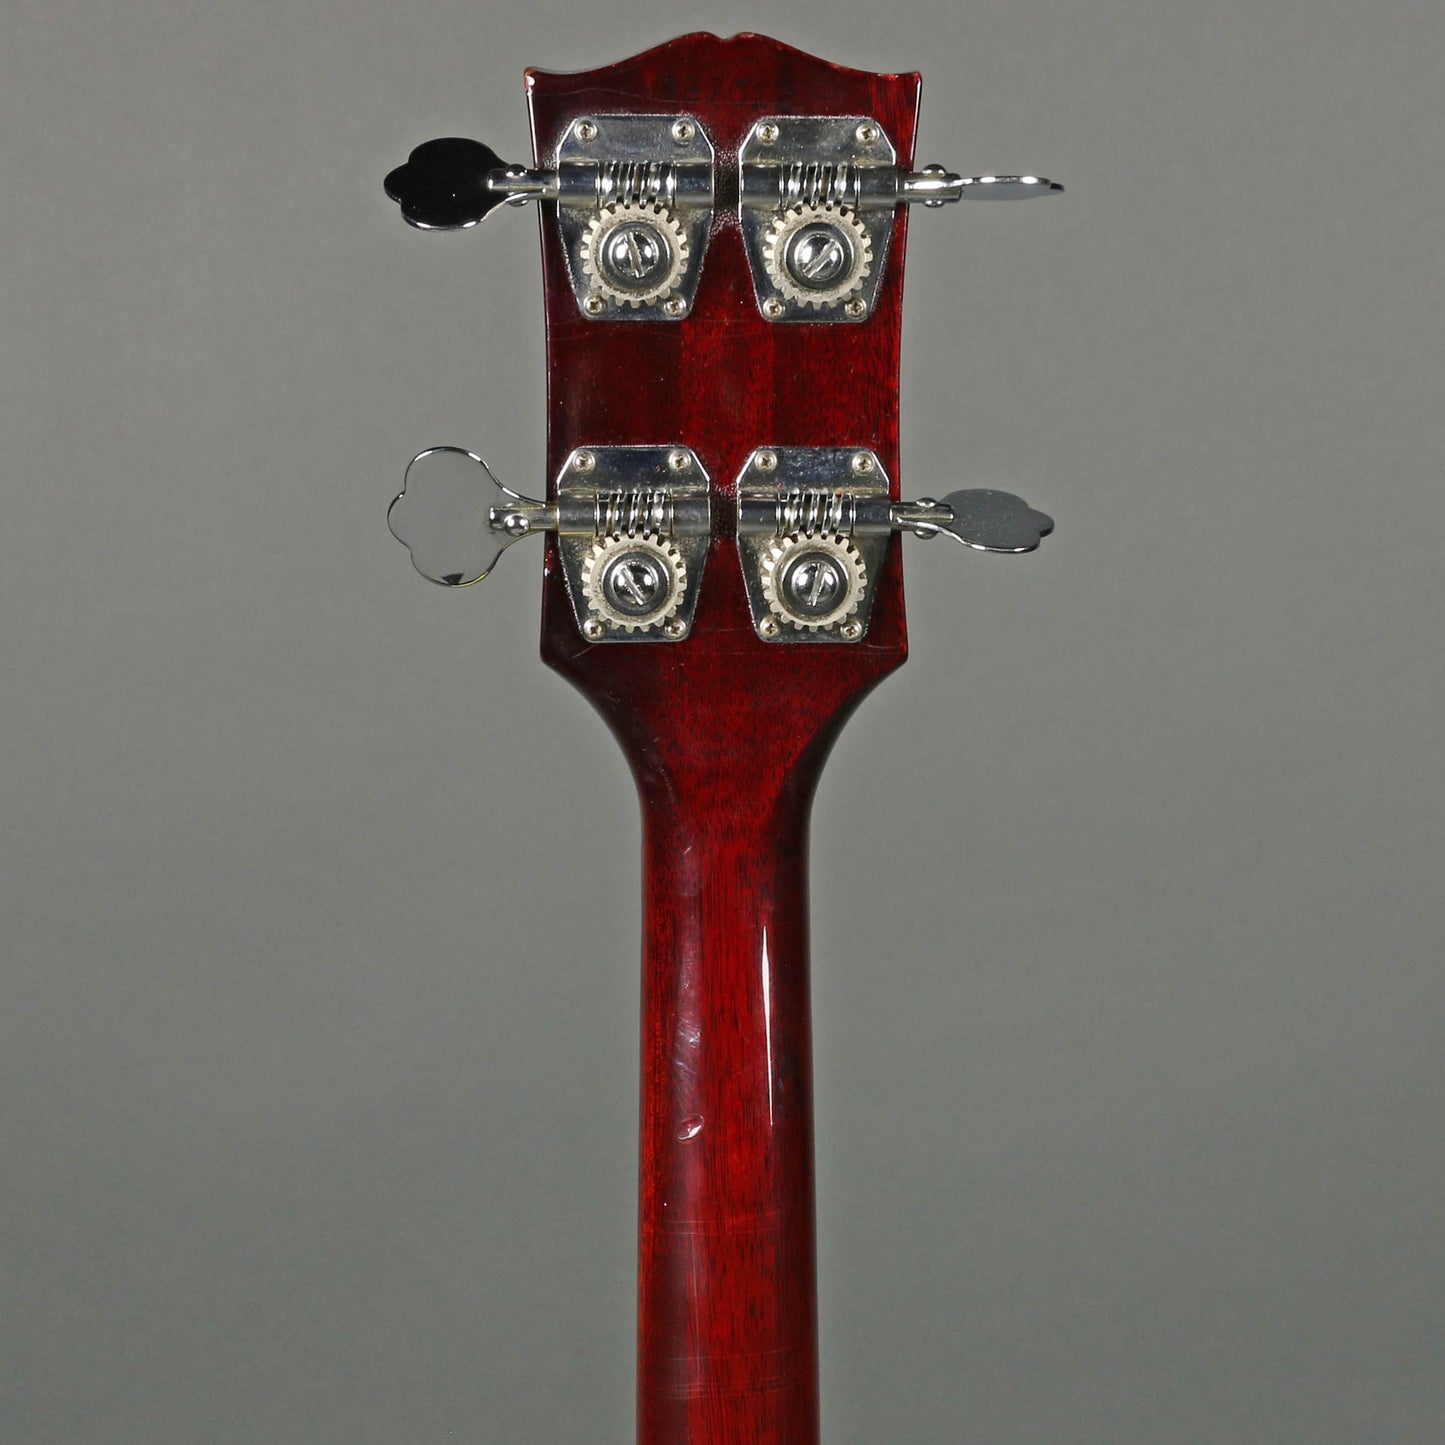 1969 Gibson EB-0